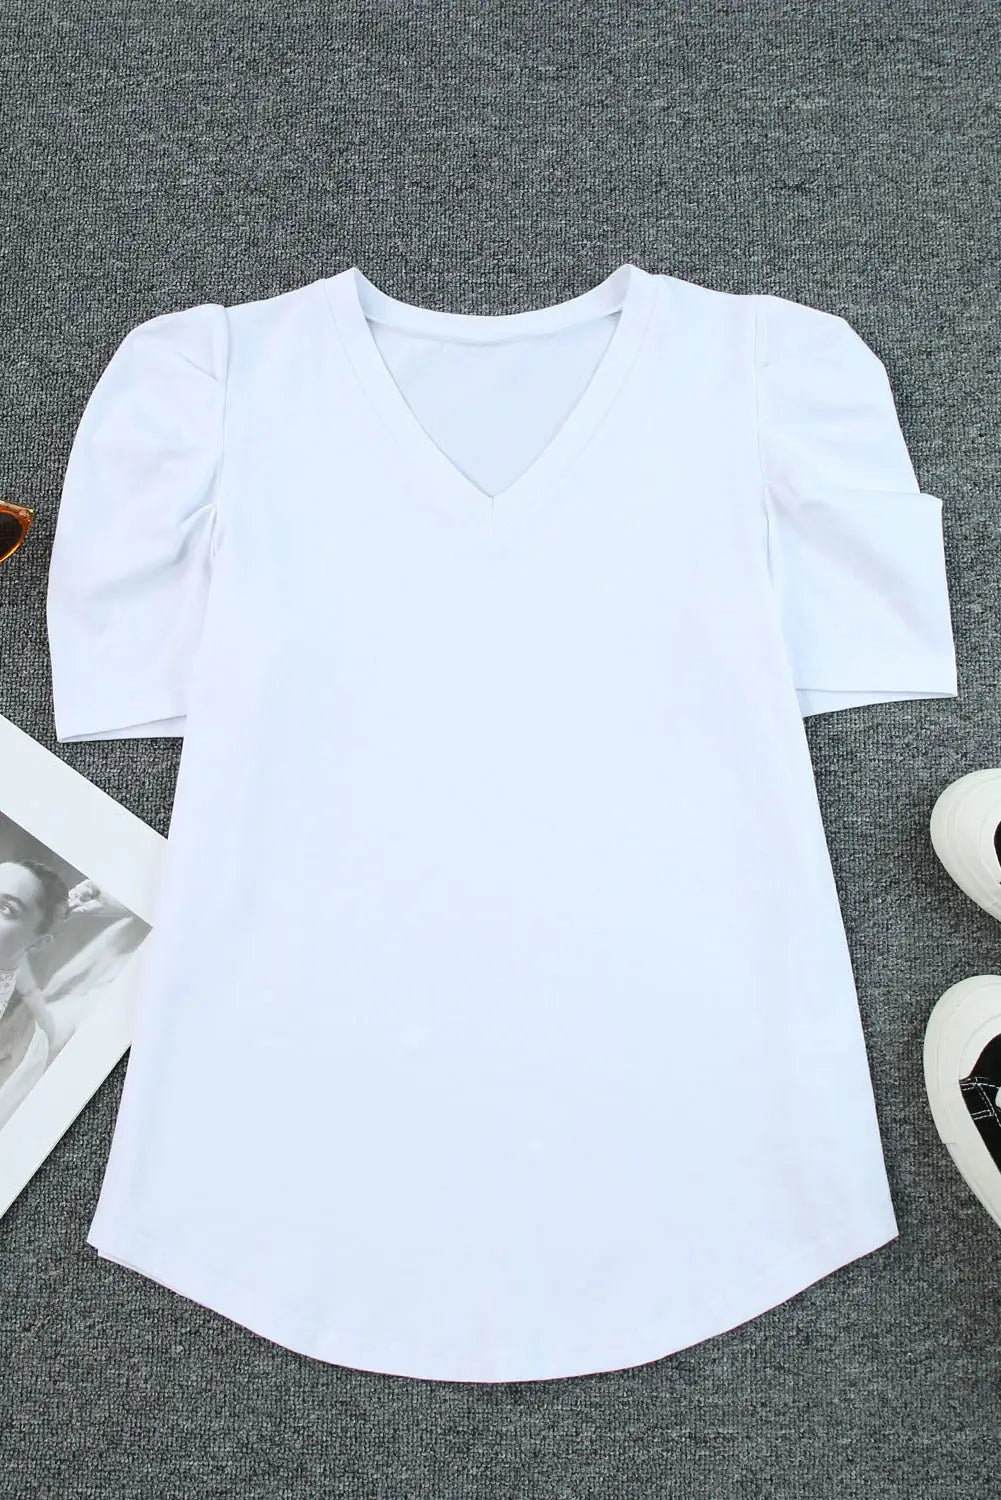 Gray puff sleeve v-neck t-shirt - tops